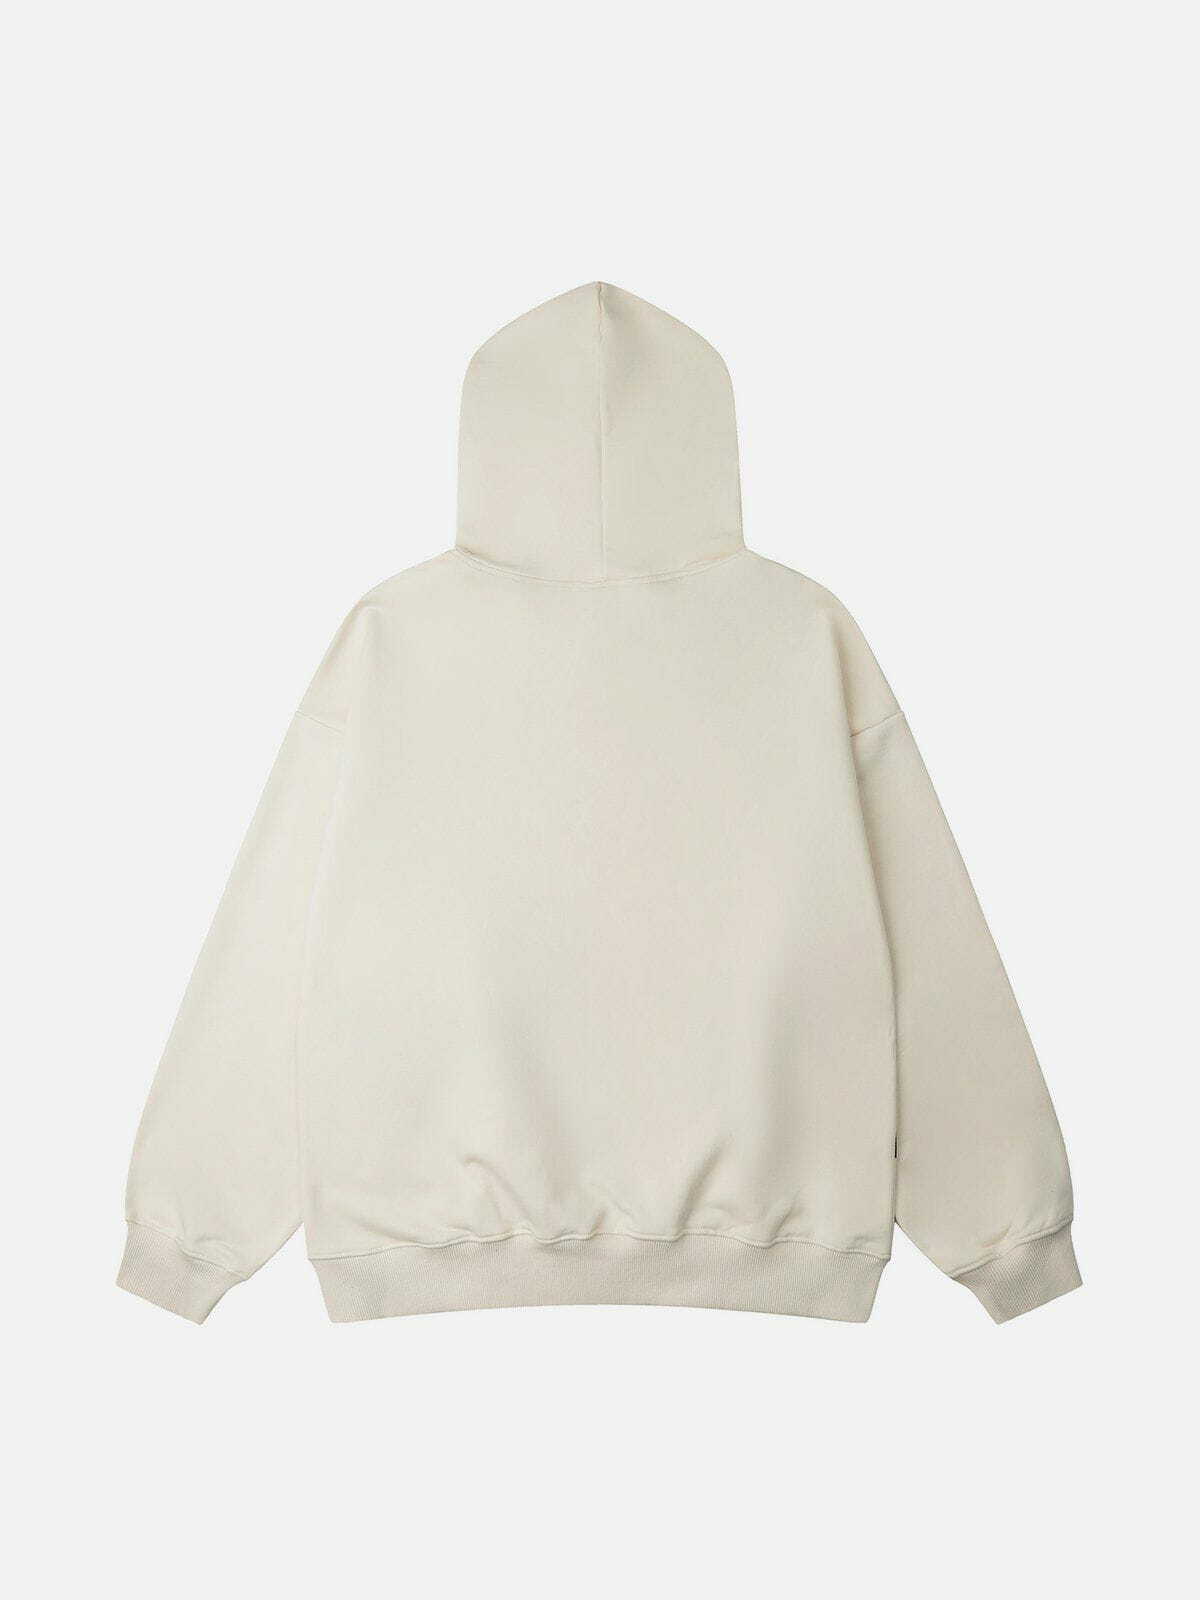 shadow print hoodie edgy & abstract streetwear 6834